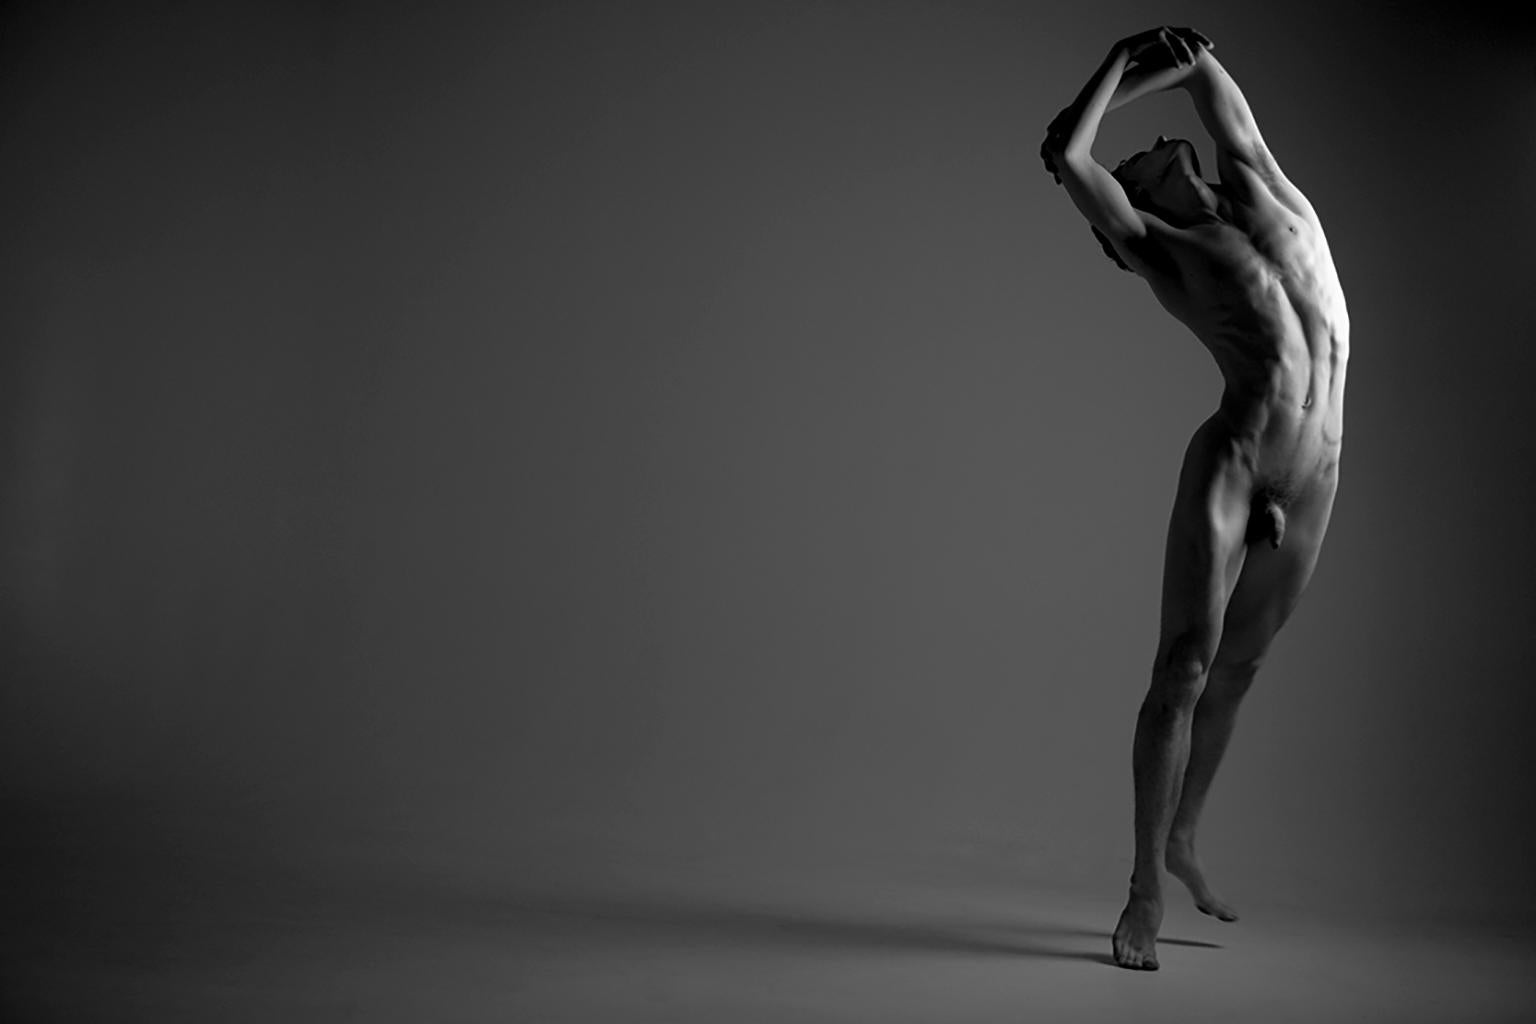 Ricky Cohete Black and White Photograph - Bailarín II. The Bailarín, series. Male Nude dancer. Black & White photograph